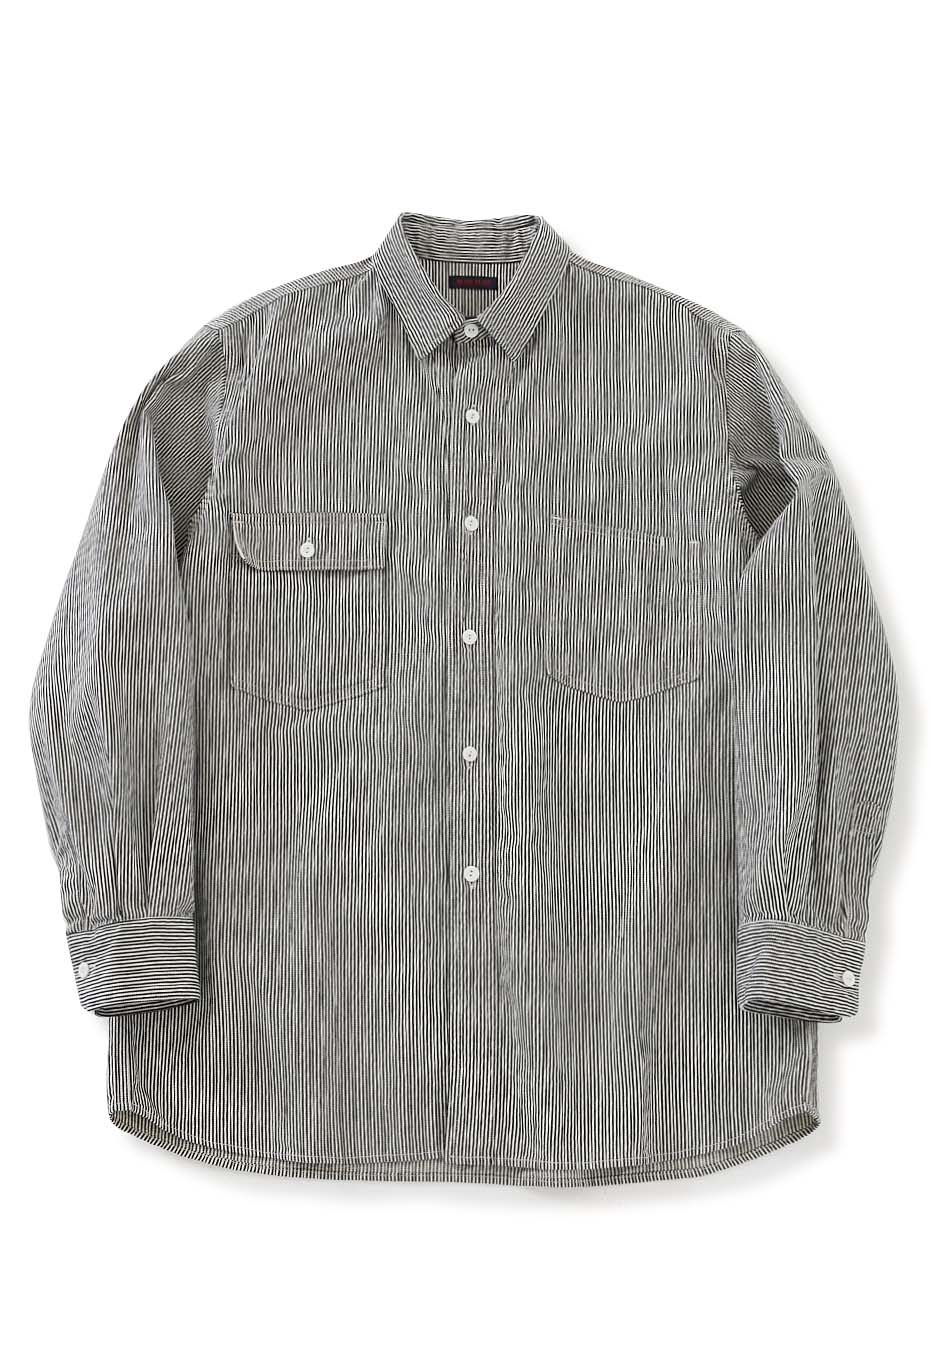 Cotton hemp hickory work shirt